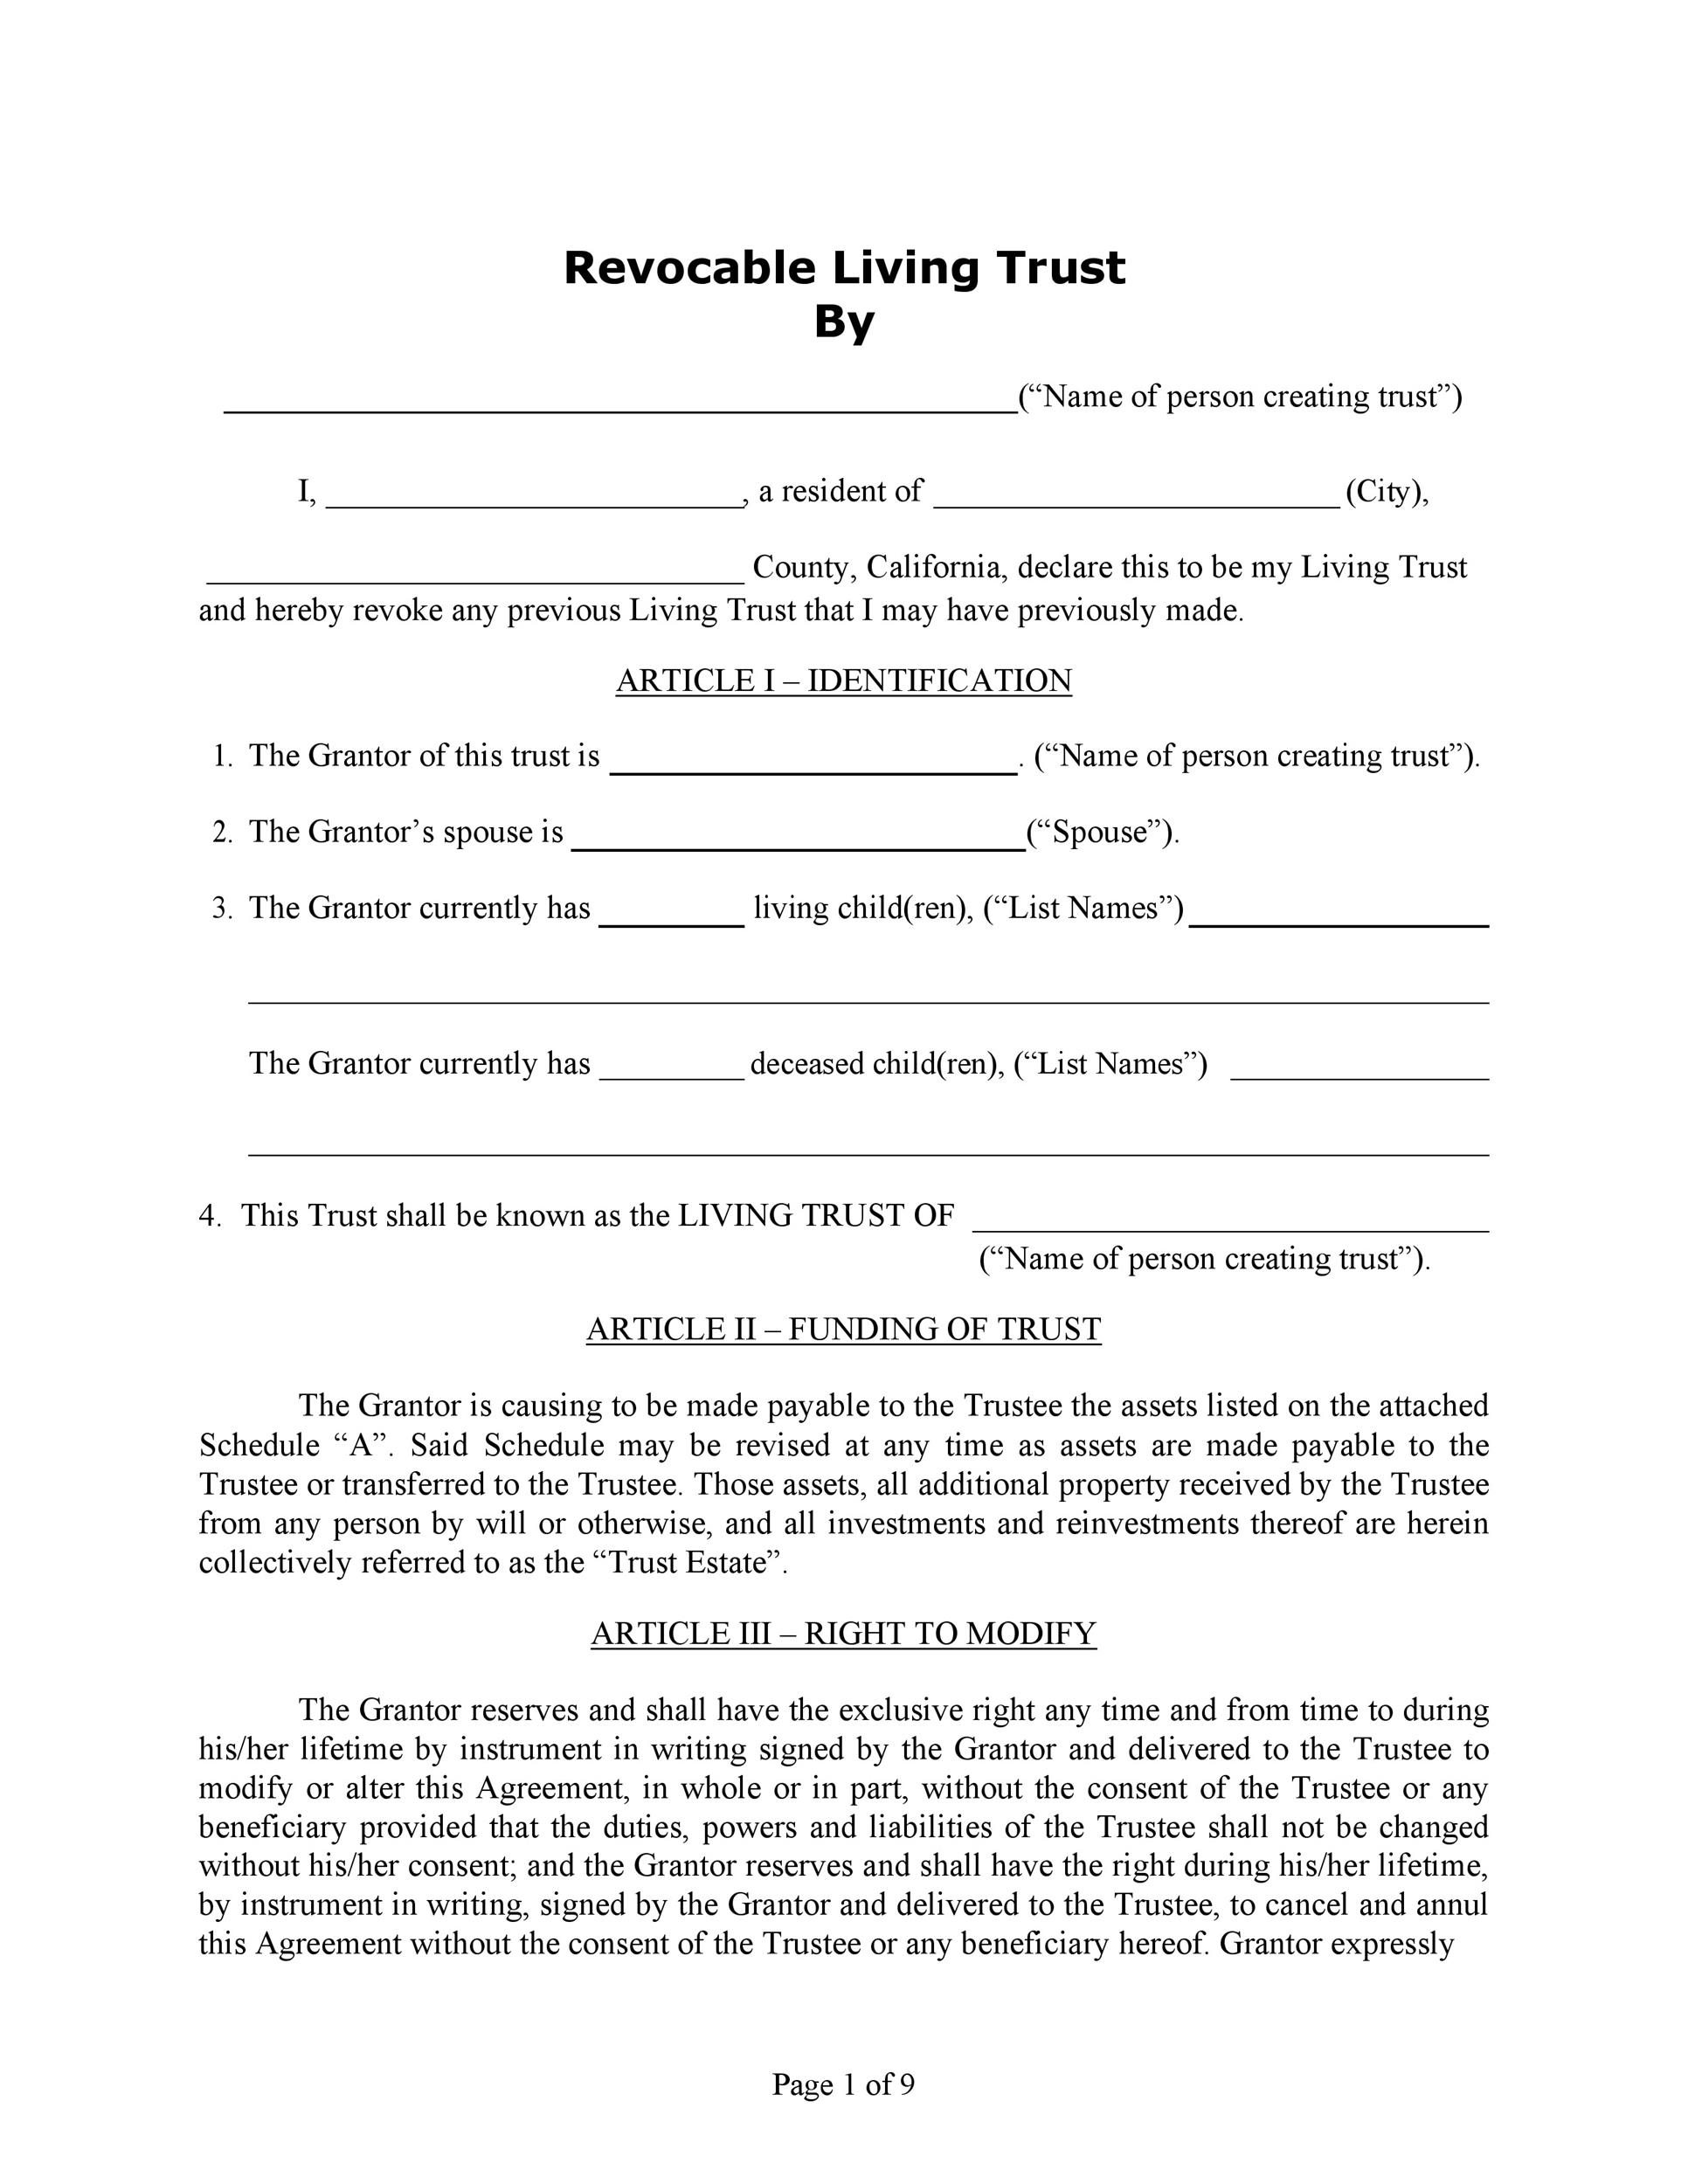 50 Professional Trust Agreement Templates [& Forms] ᐅ TemplateLab